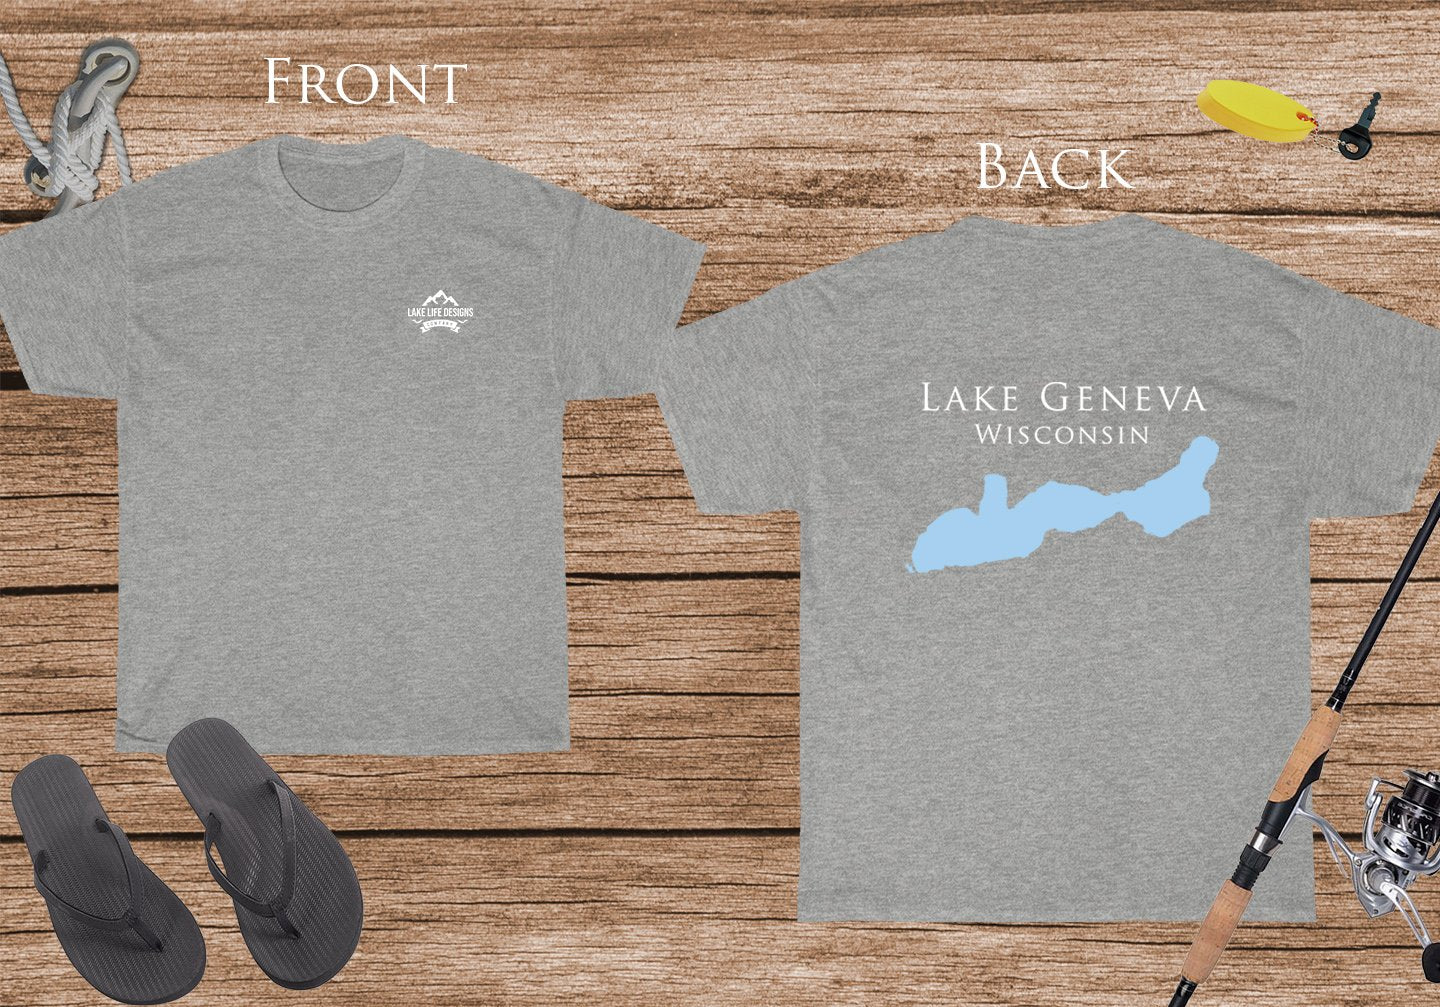 Lake Geneva - Cotton Short Sleeved - FRONT & BACK PRINTED - Short Sleeved Cotton Tee - Wisconsin Lake